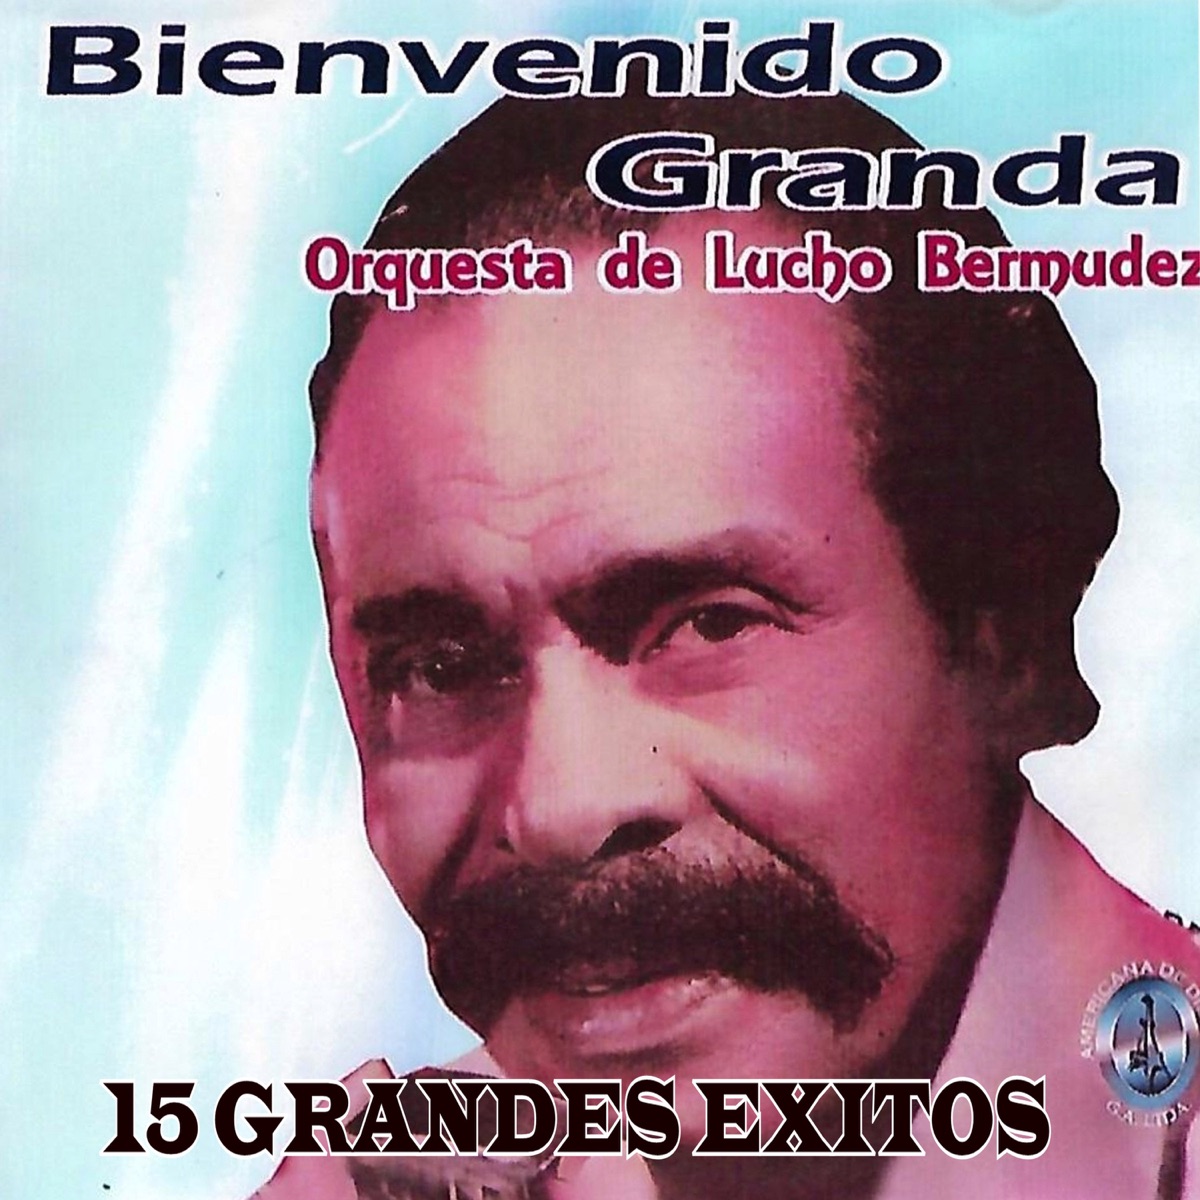 Play The Singing Moustache Vol.2 by Bienvenido Granda on  Music